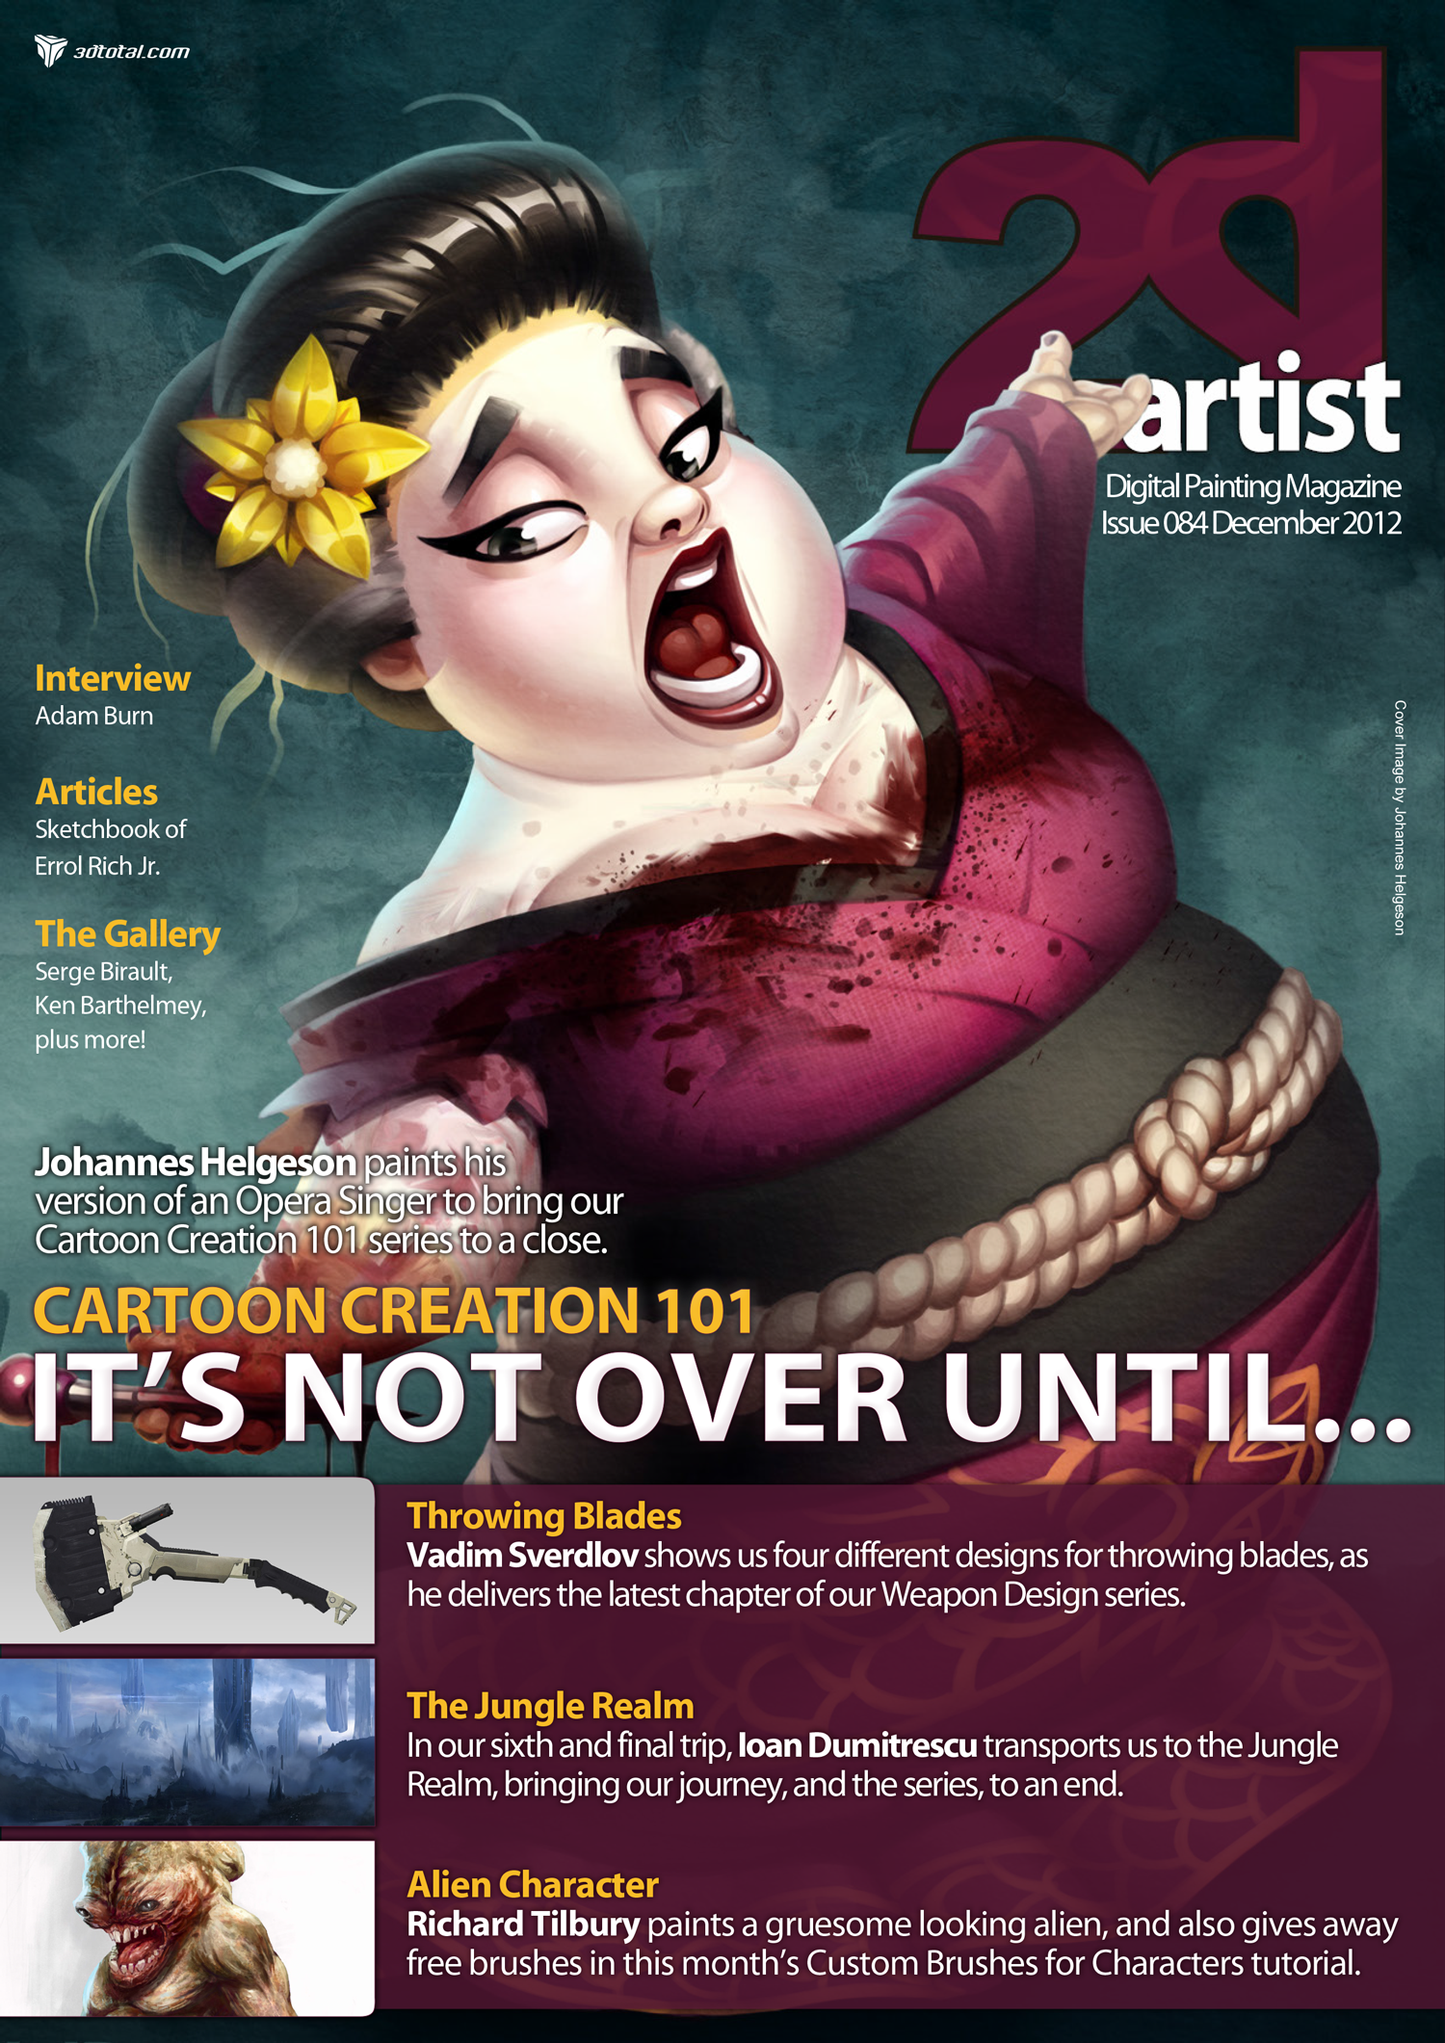 2DArtist: Issue 084 - December 2012 (Download Only)